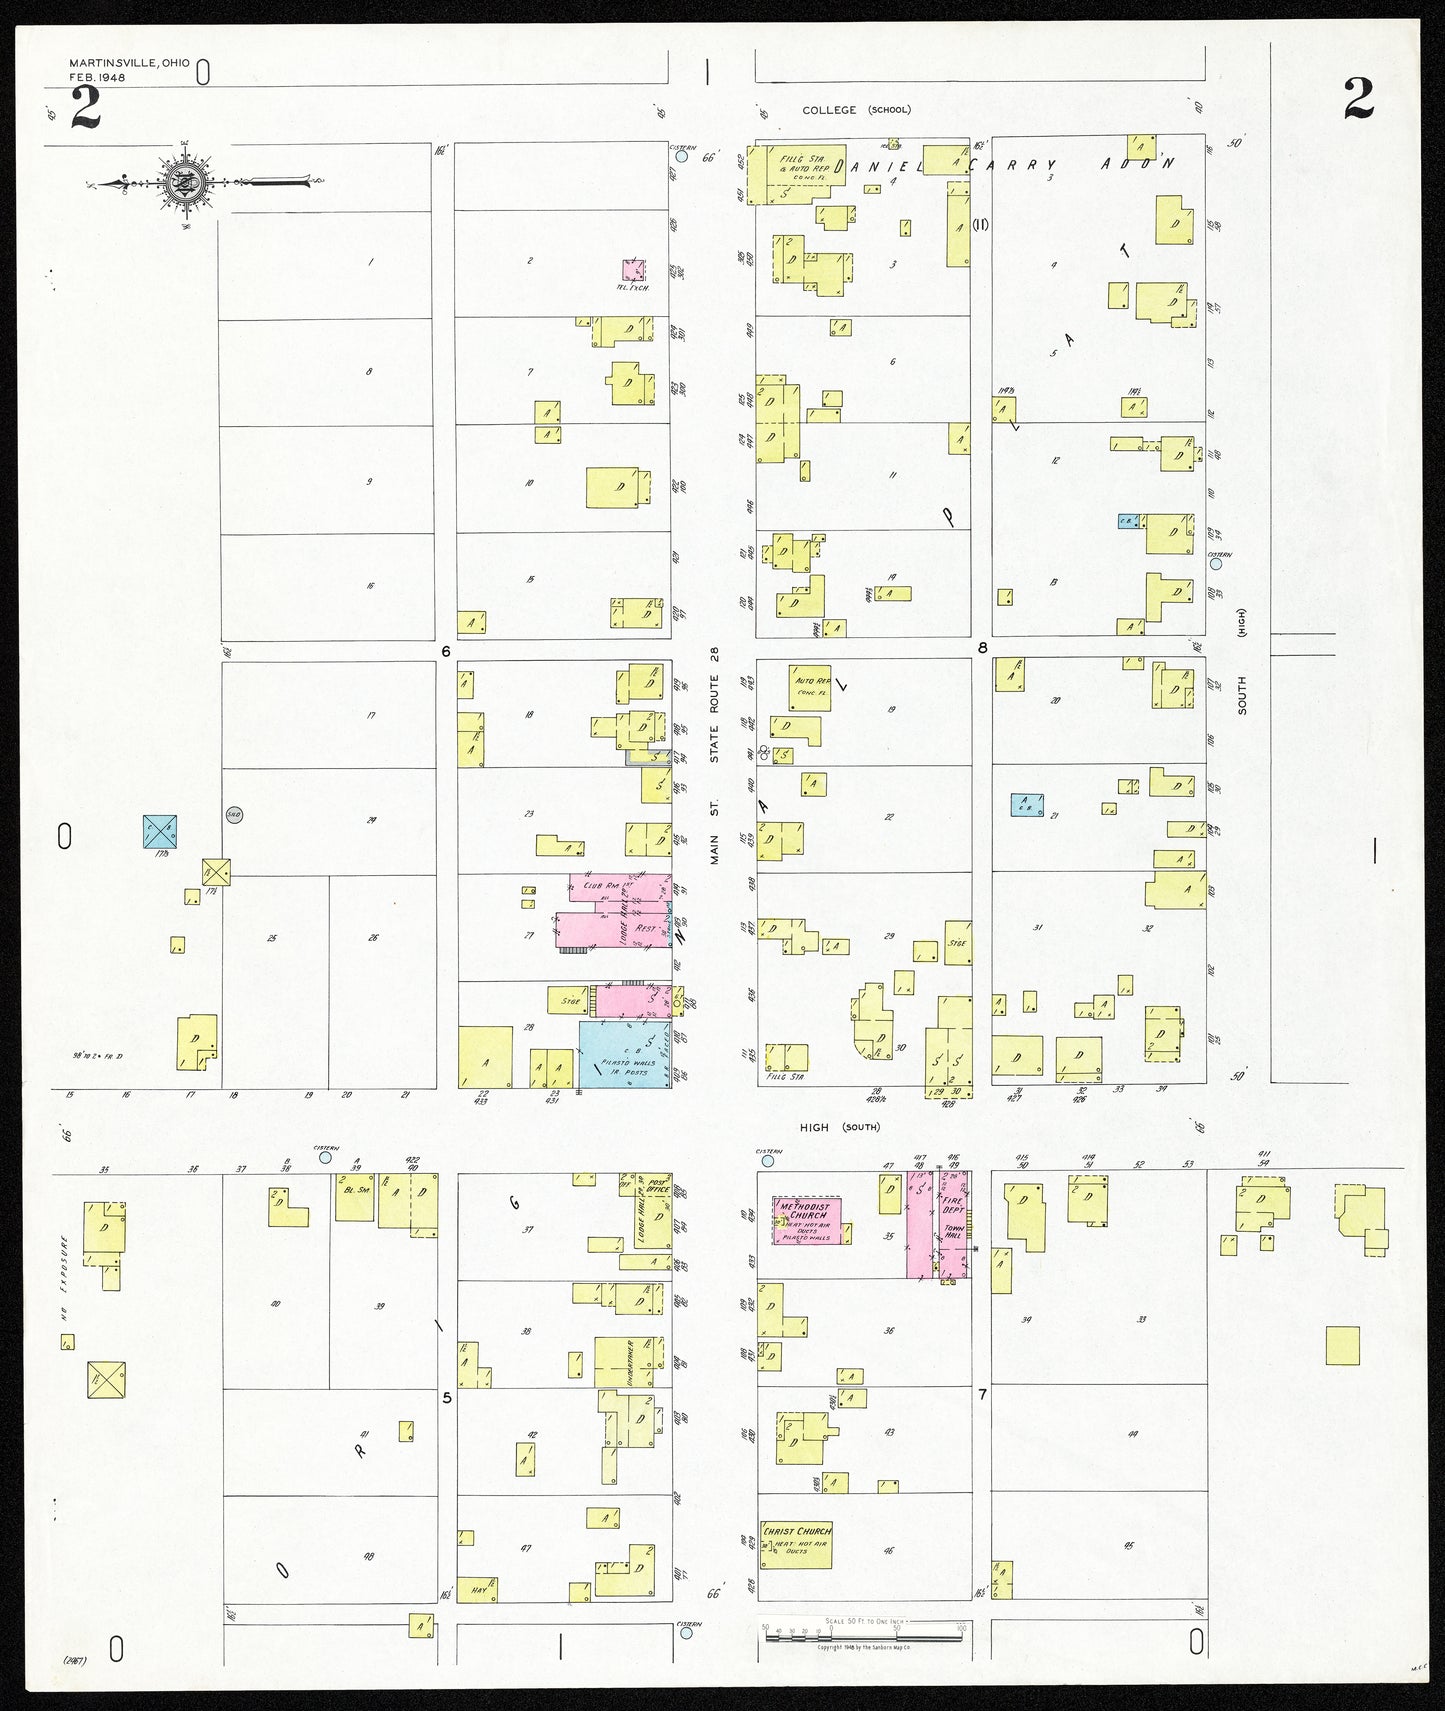 1948 Sanborn Fire Insurance Maps of Martinsville.